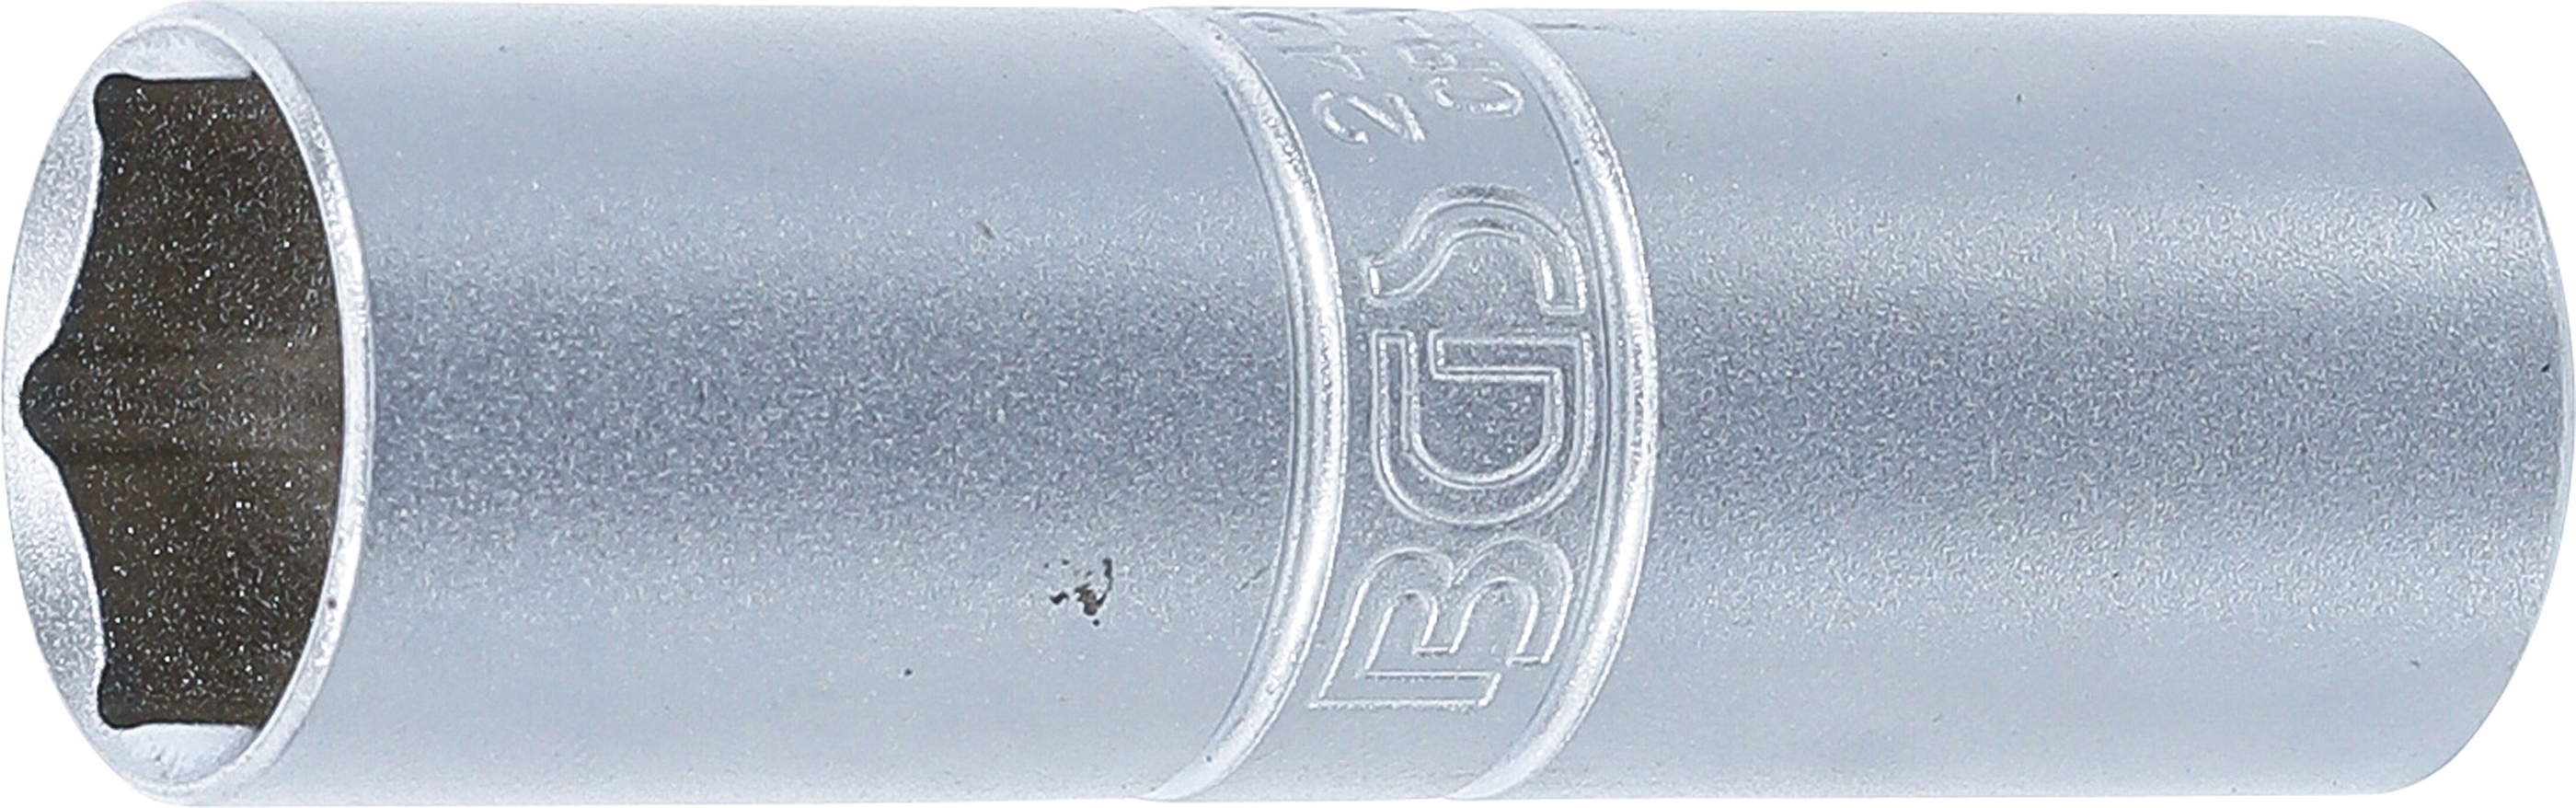 BGS 2425 Cheie pentru bujii 6 colțuri cu perete subţire 12,5 mm (1/2"), 16 mm